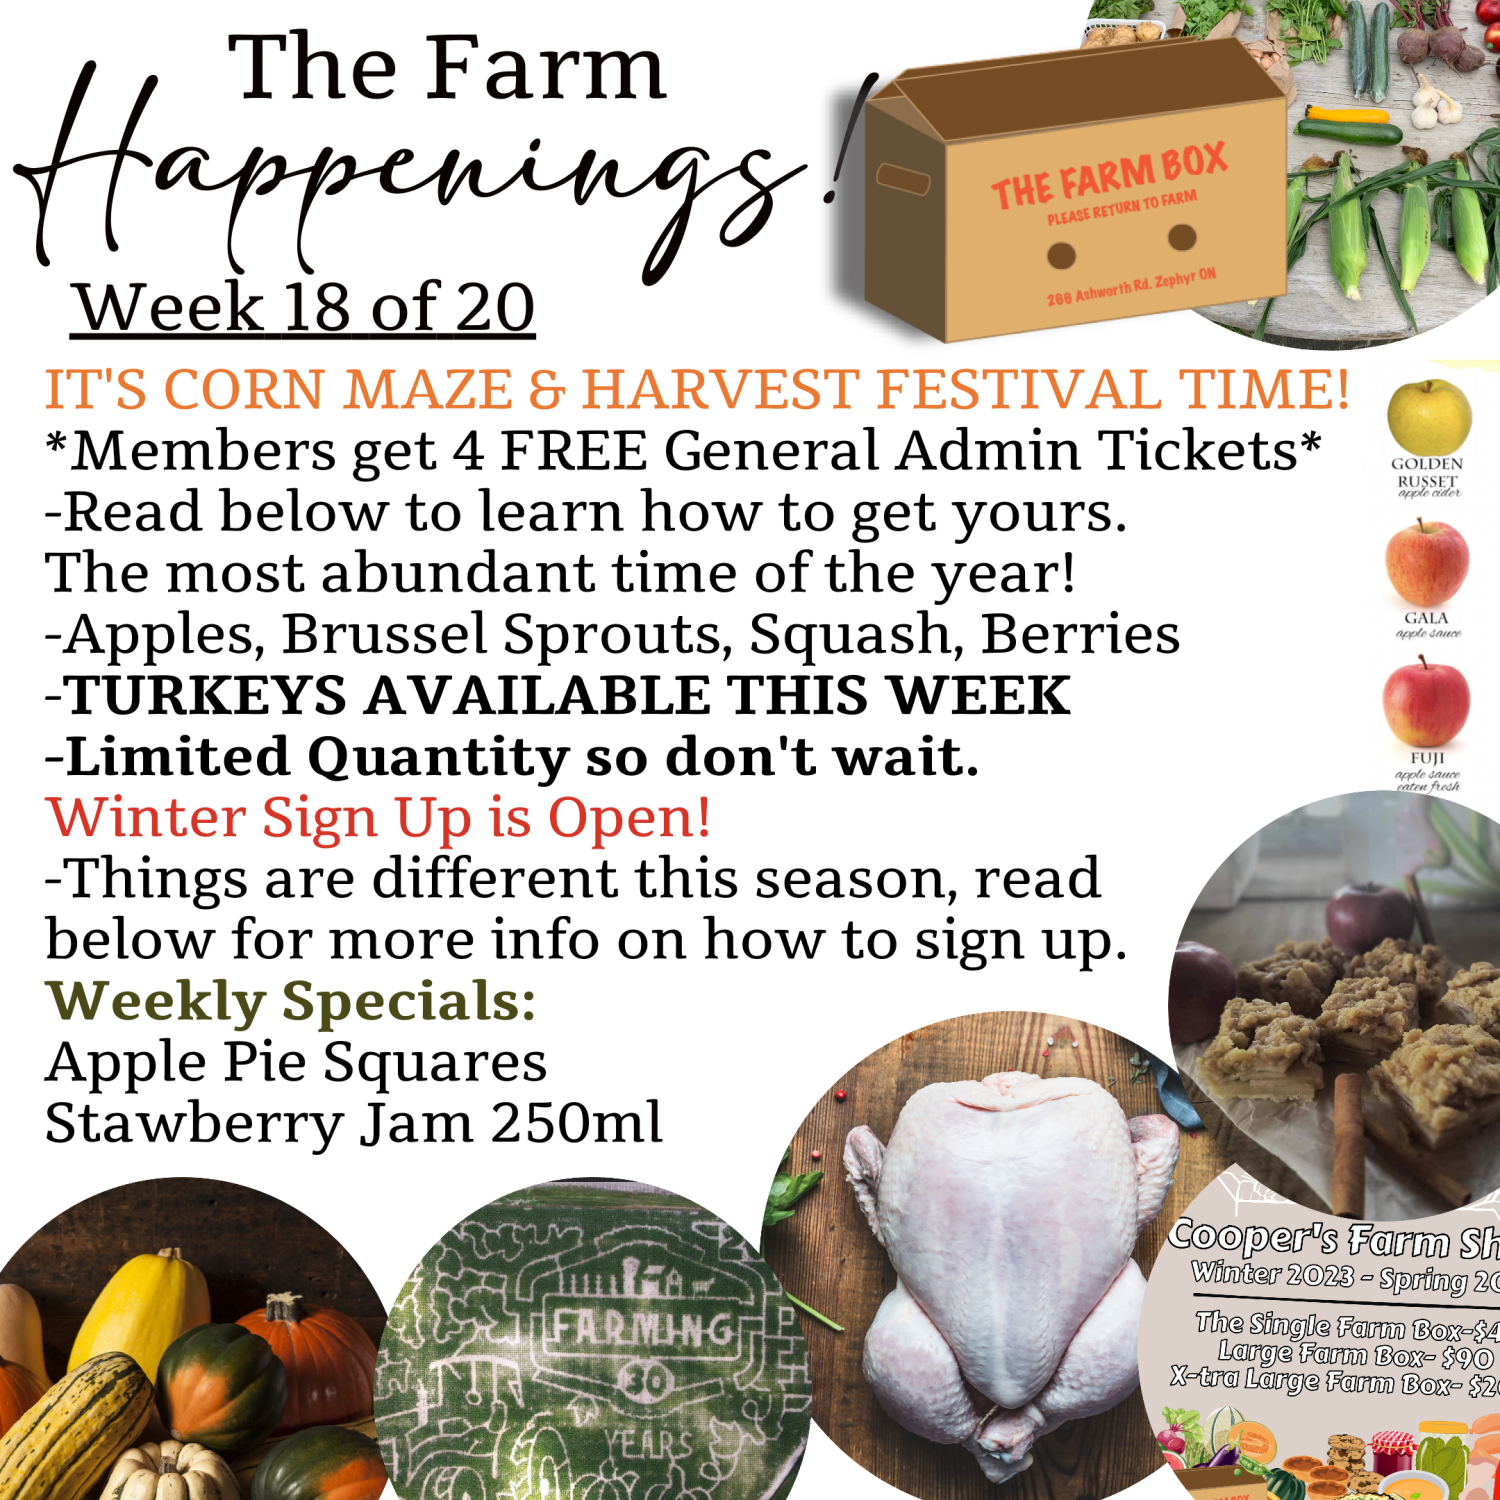 Previous Happening: "The Farm Box"-Coopers CSA Farm Farm Happenings Week 18